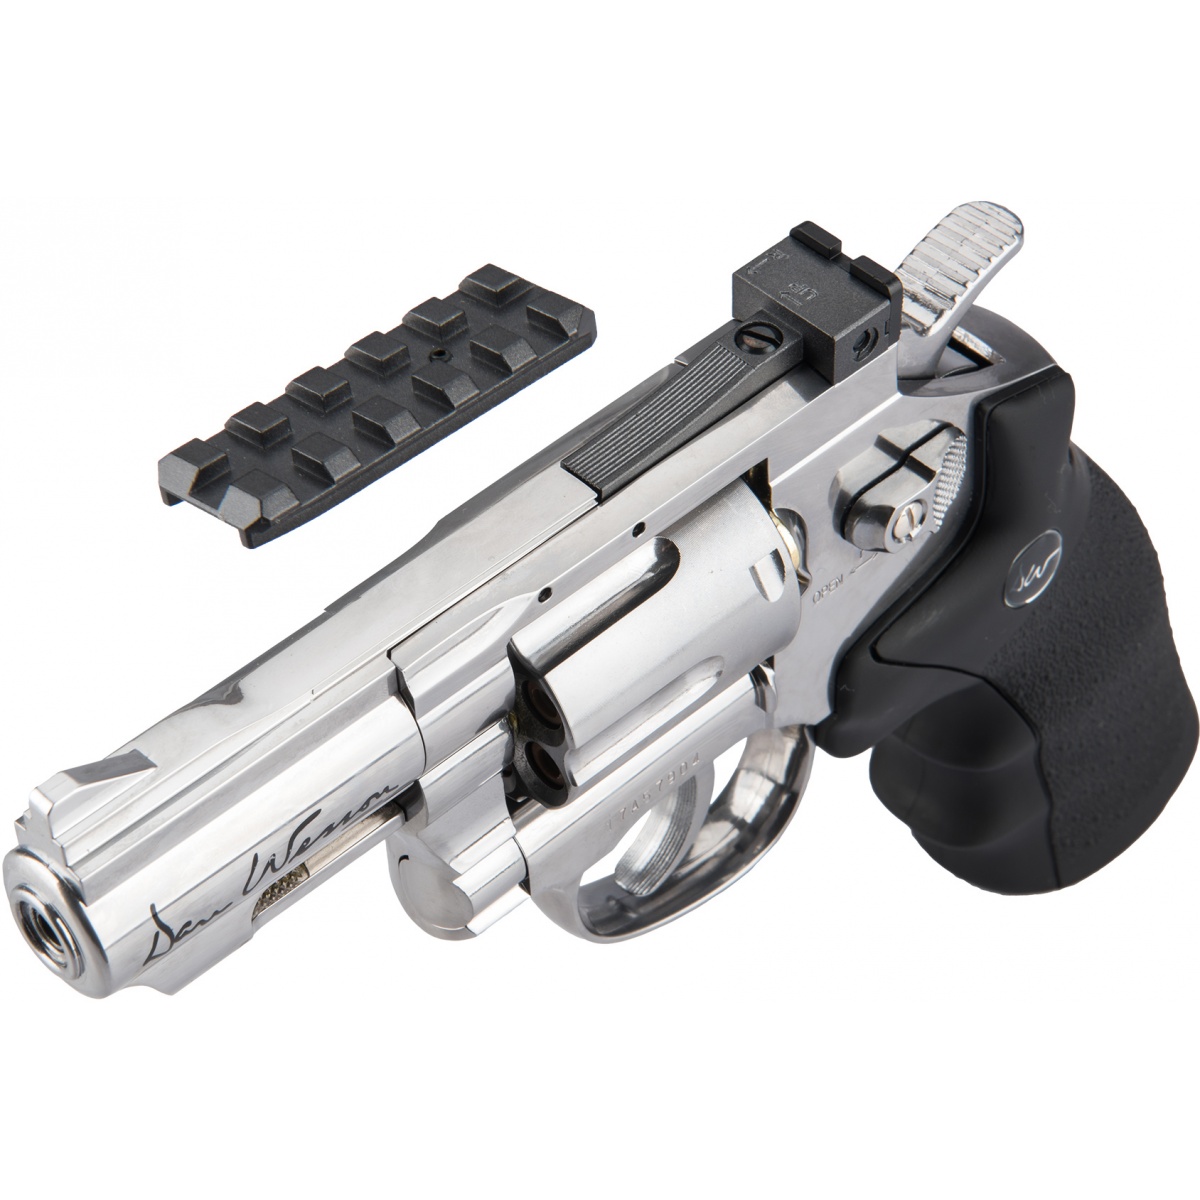 Dan Wesson Revolver 2.5 🎯 Ref. de CO2 